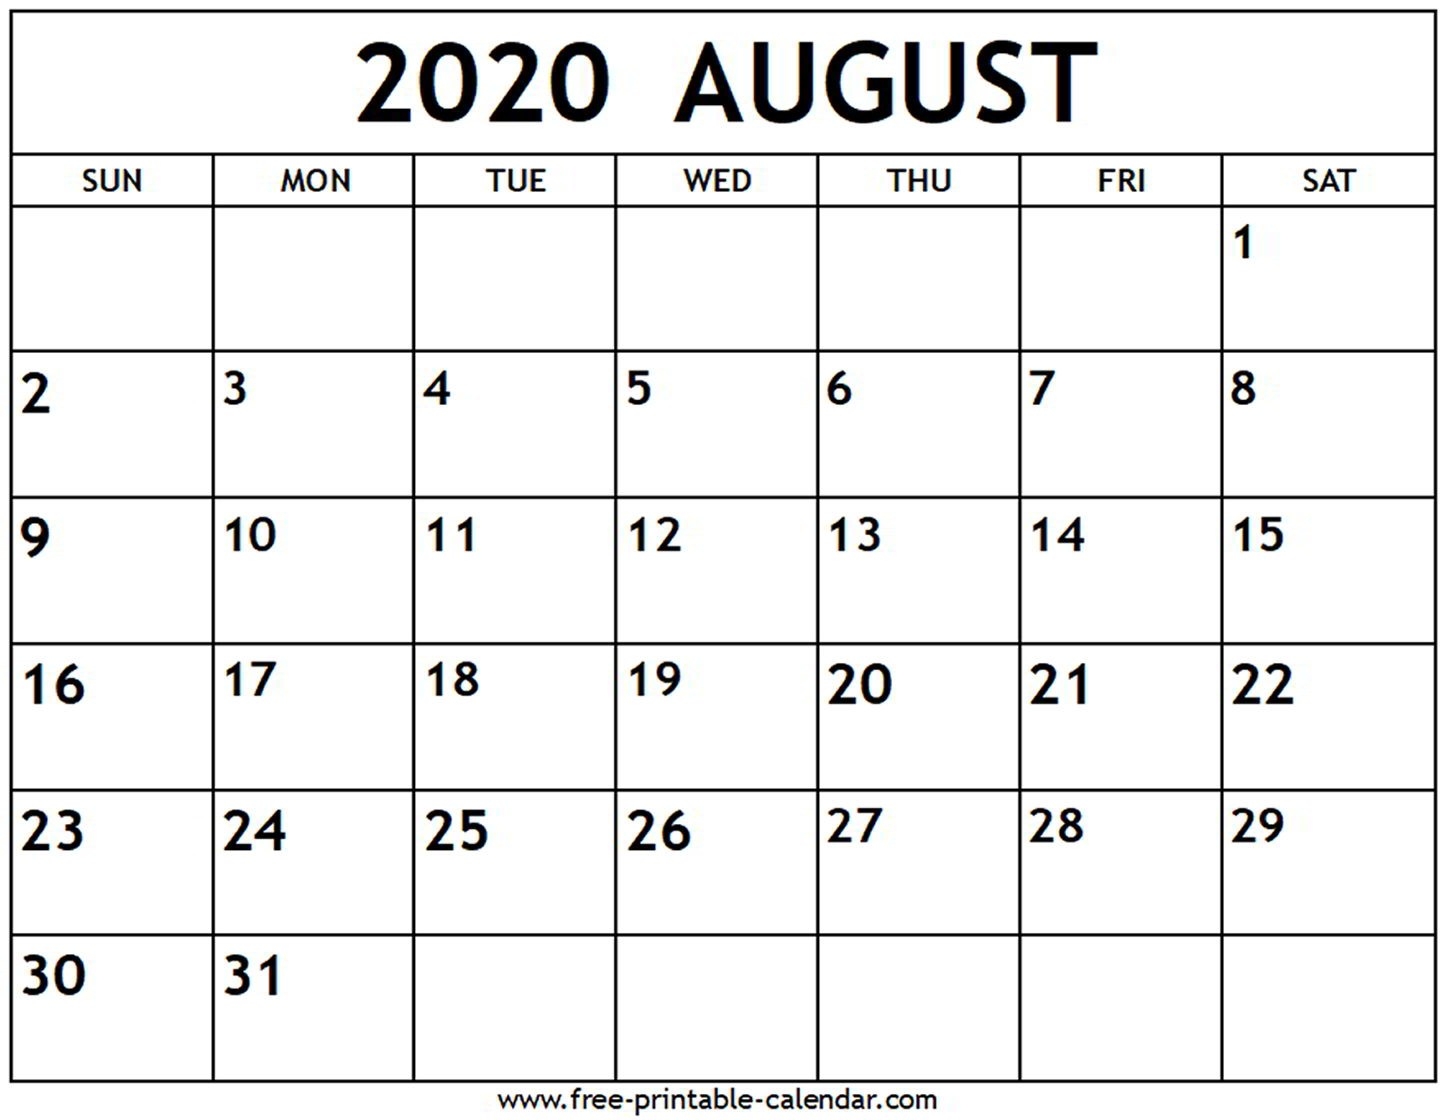 August 2020 Calendar - Free-Printable-Calendar  August 2020 Calendar